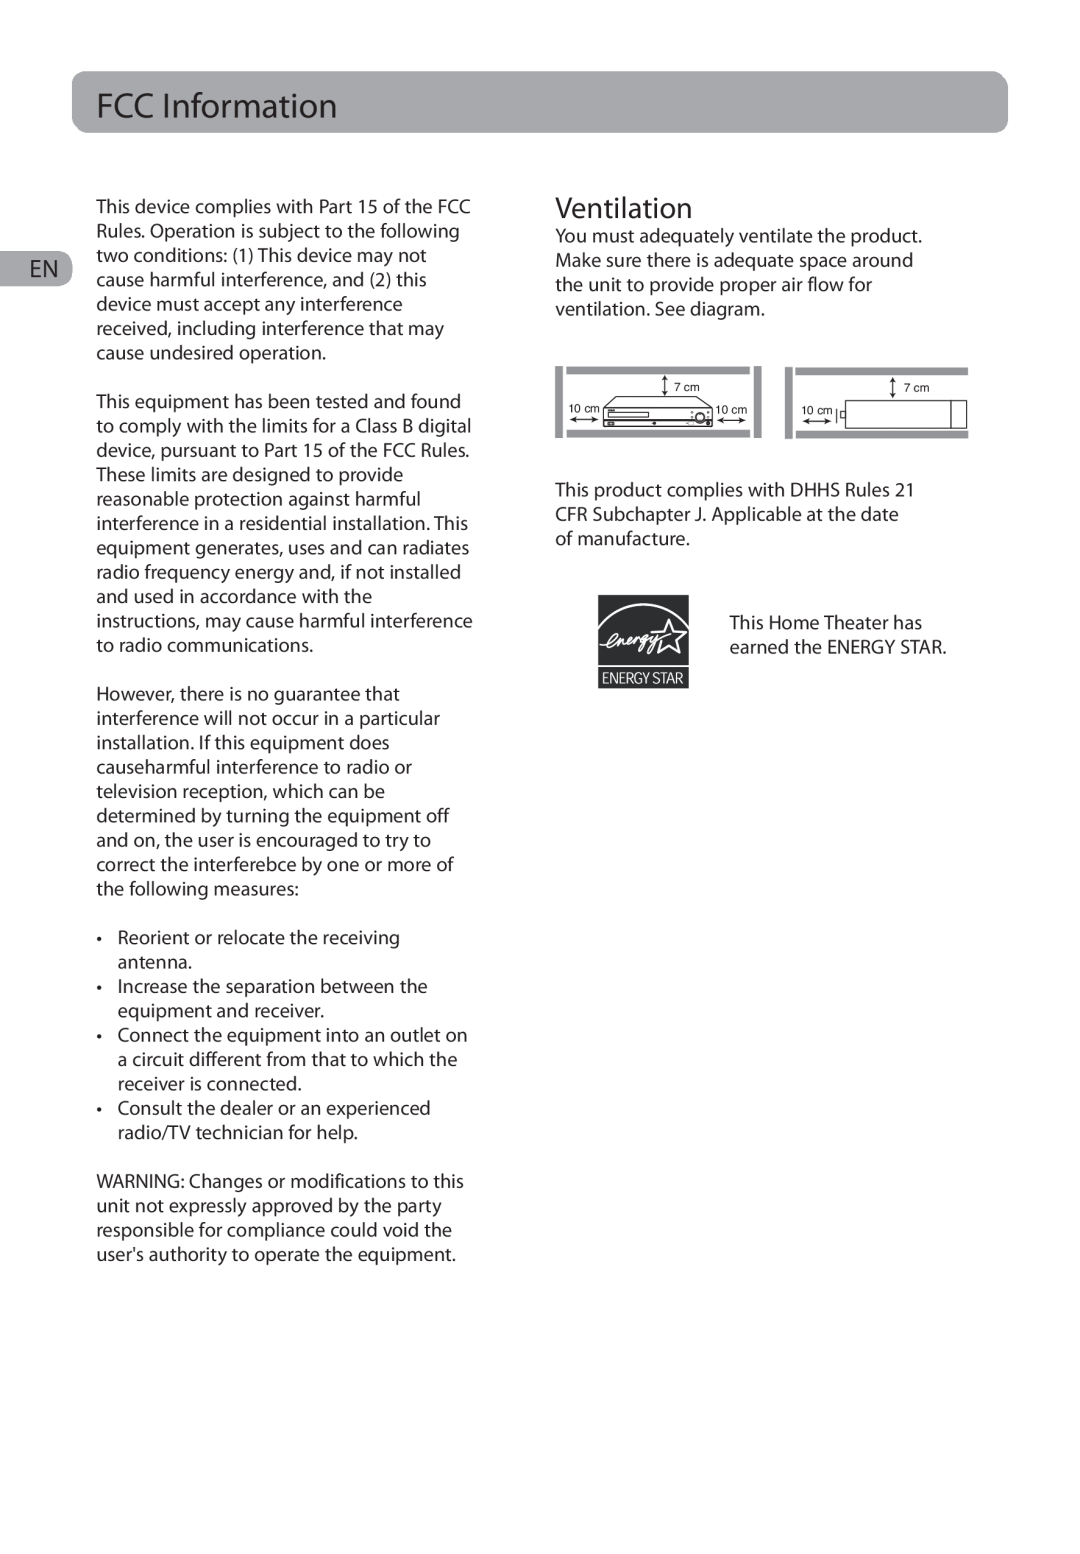 RCA RTD317 user manual FCC Information, Ventilation 